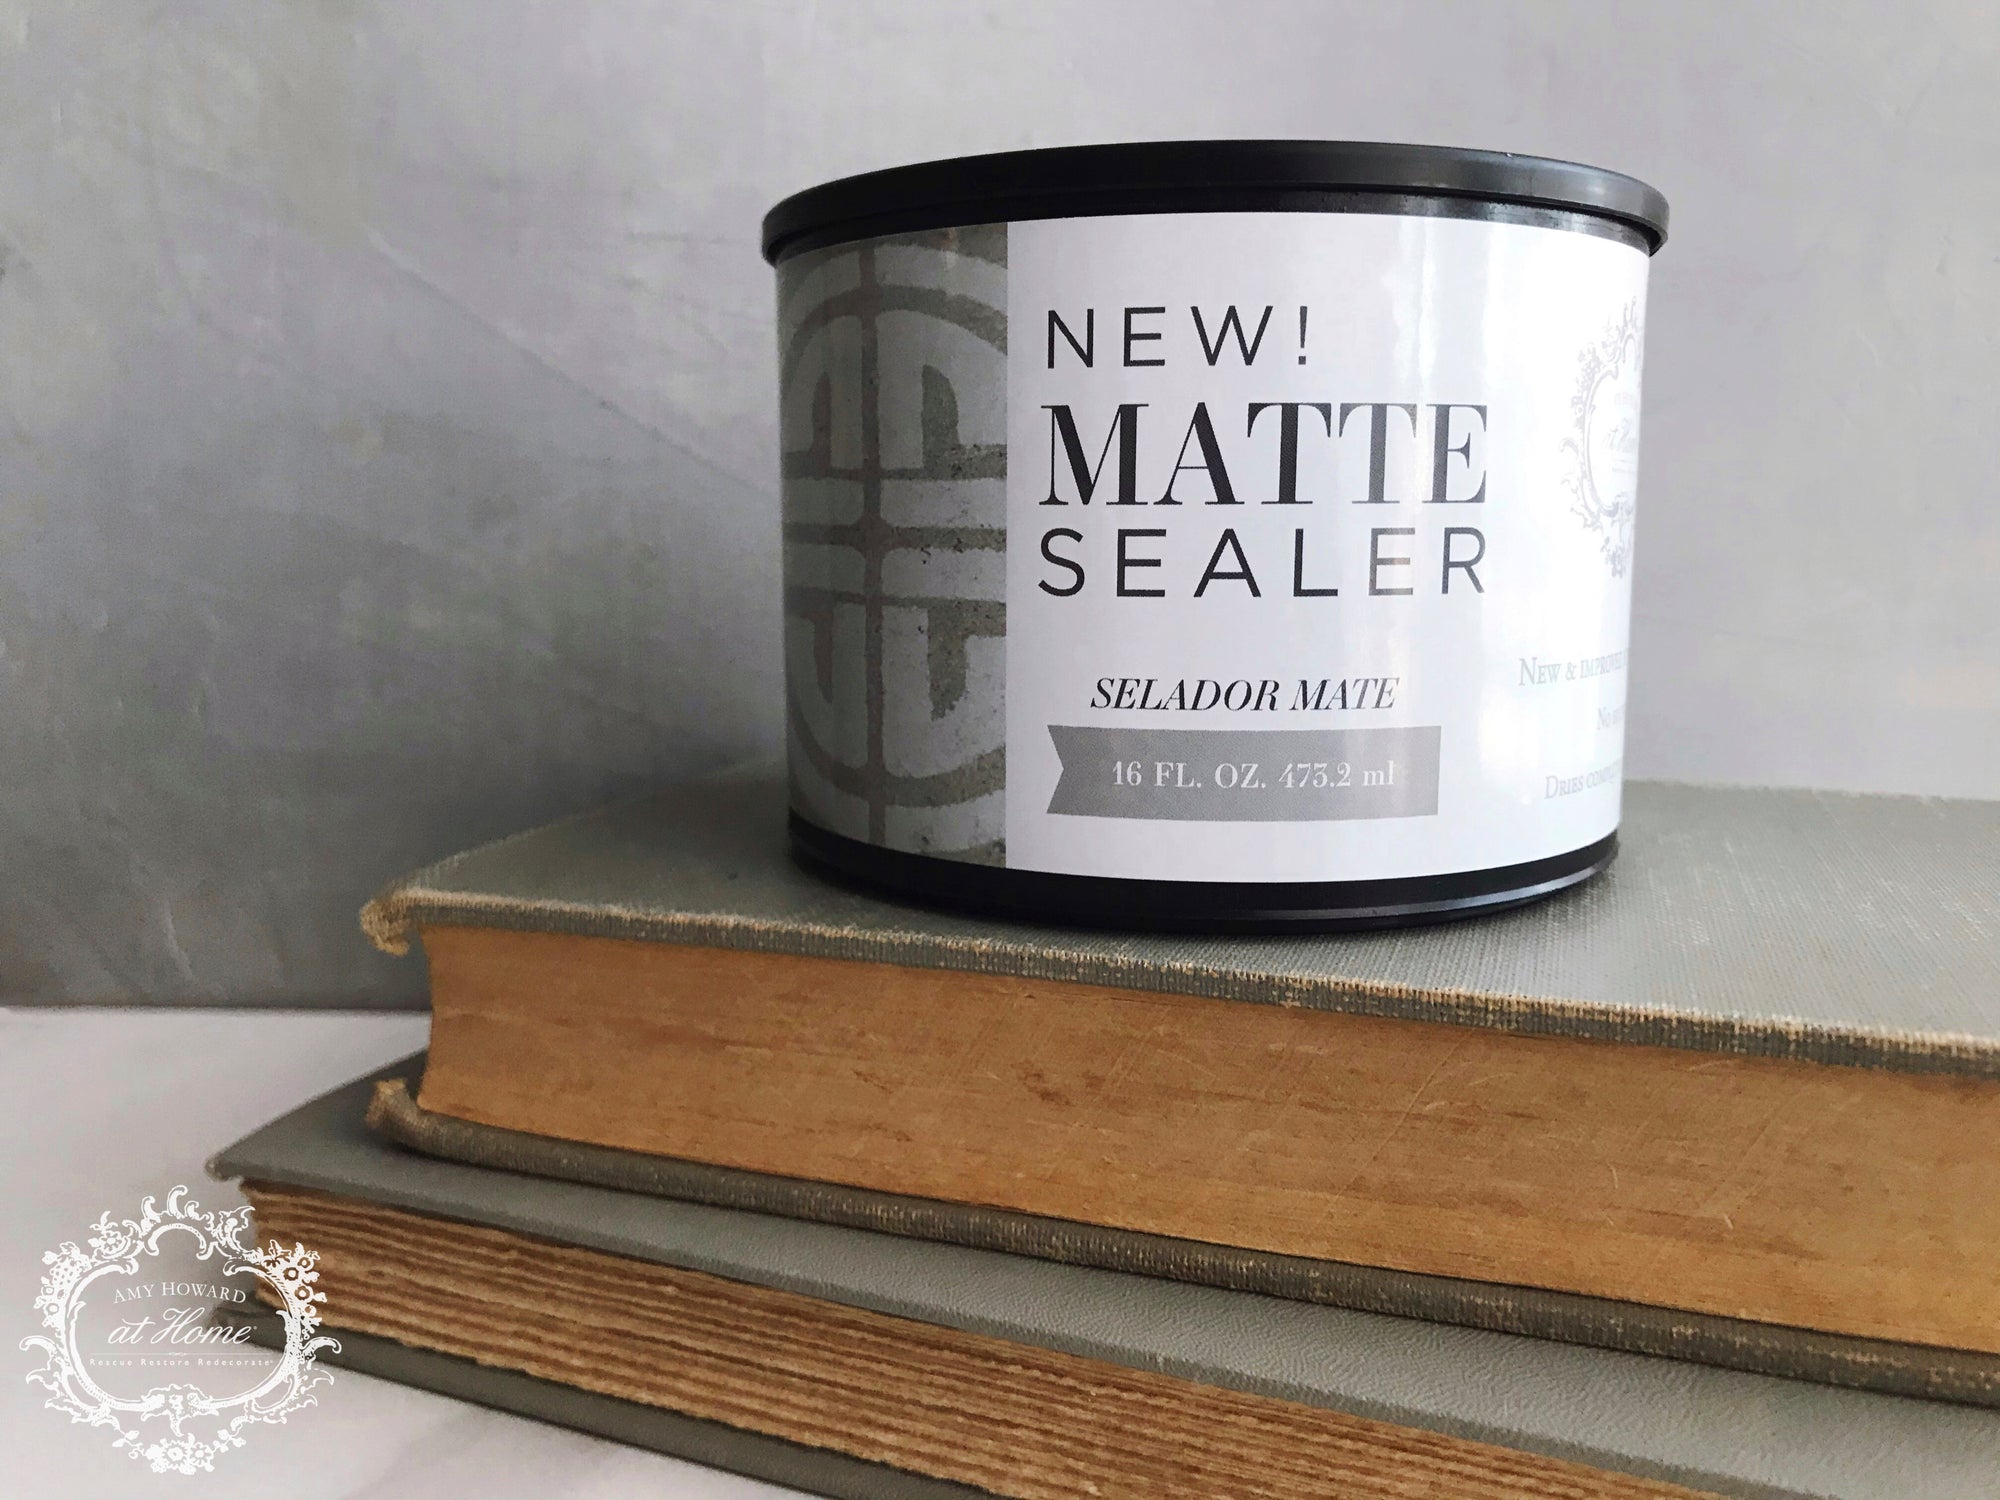 New! Matte Sealer